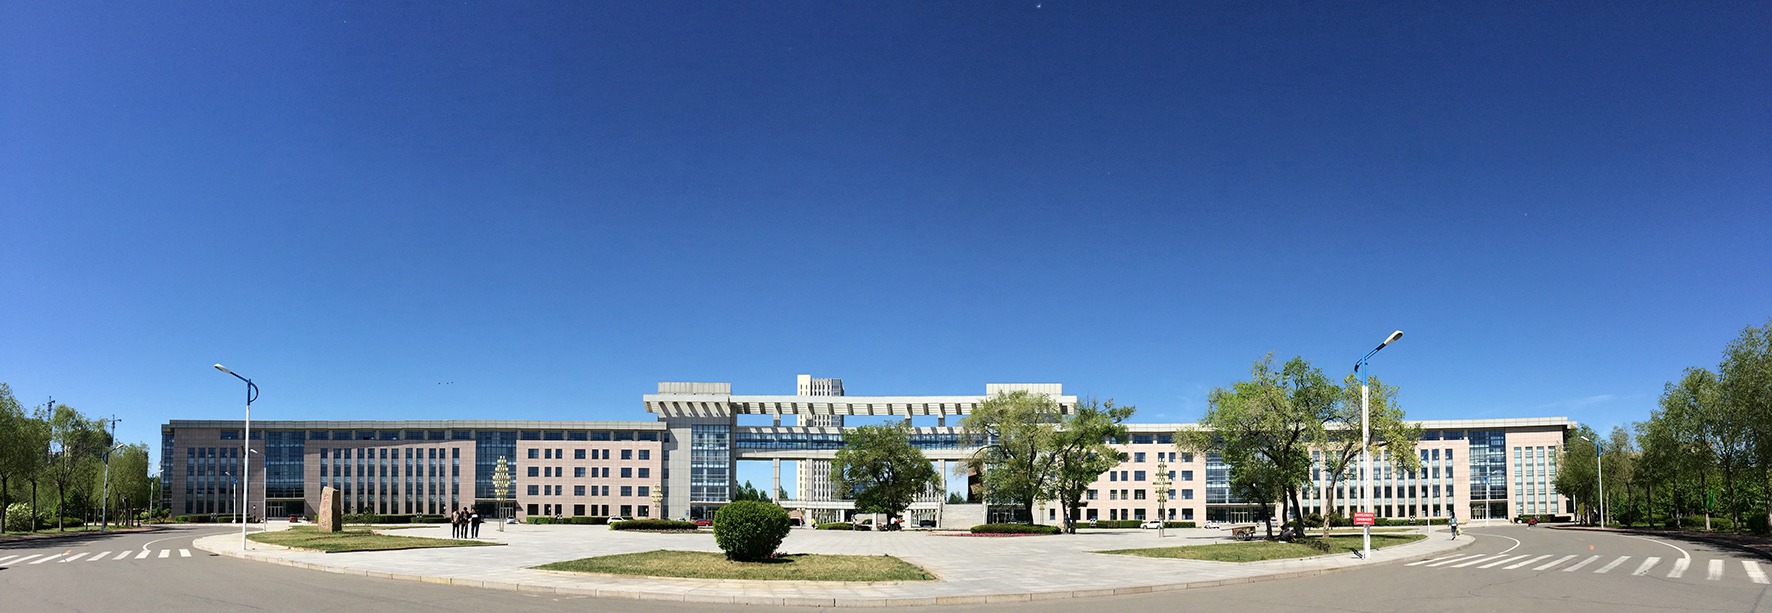 Qiqihar Medical College